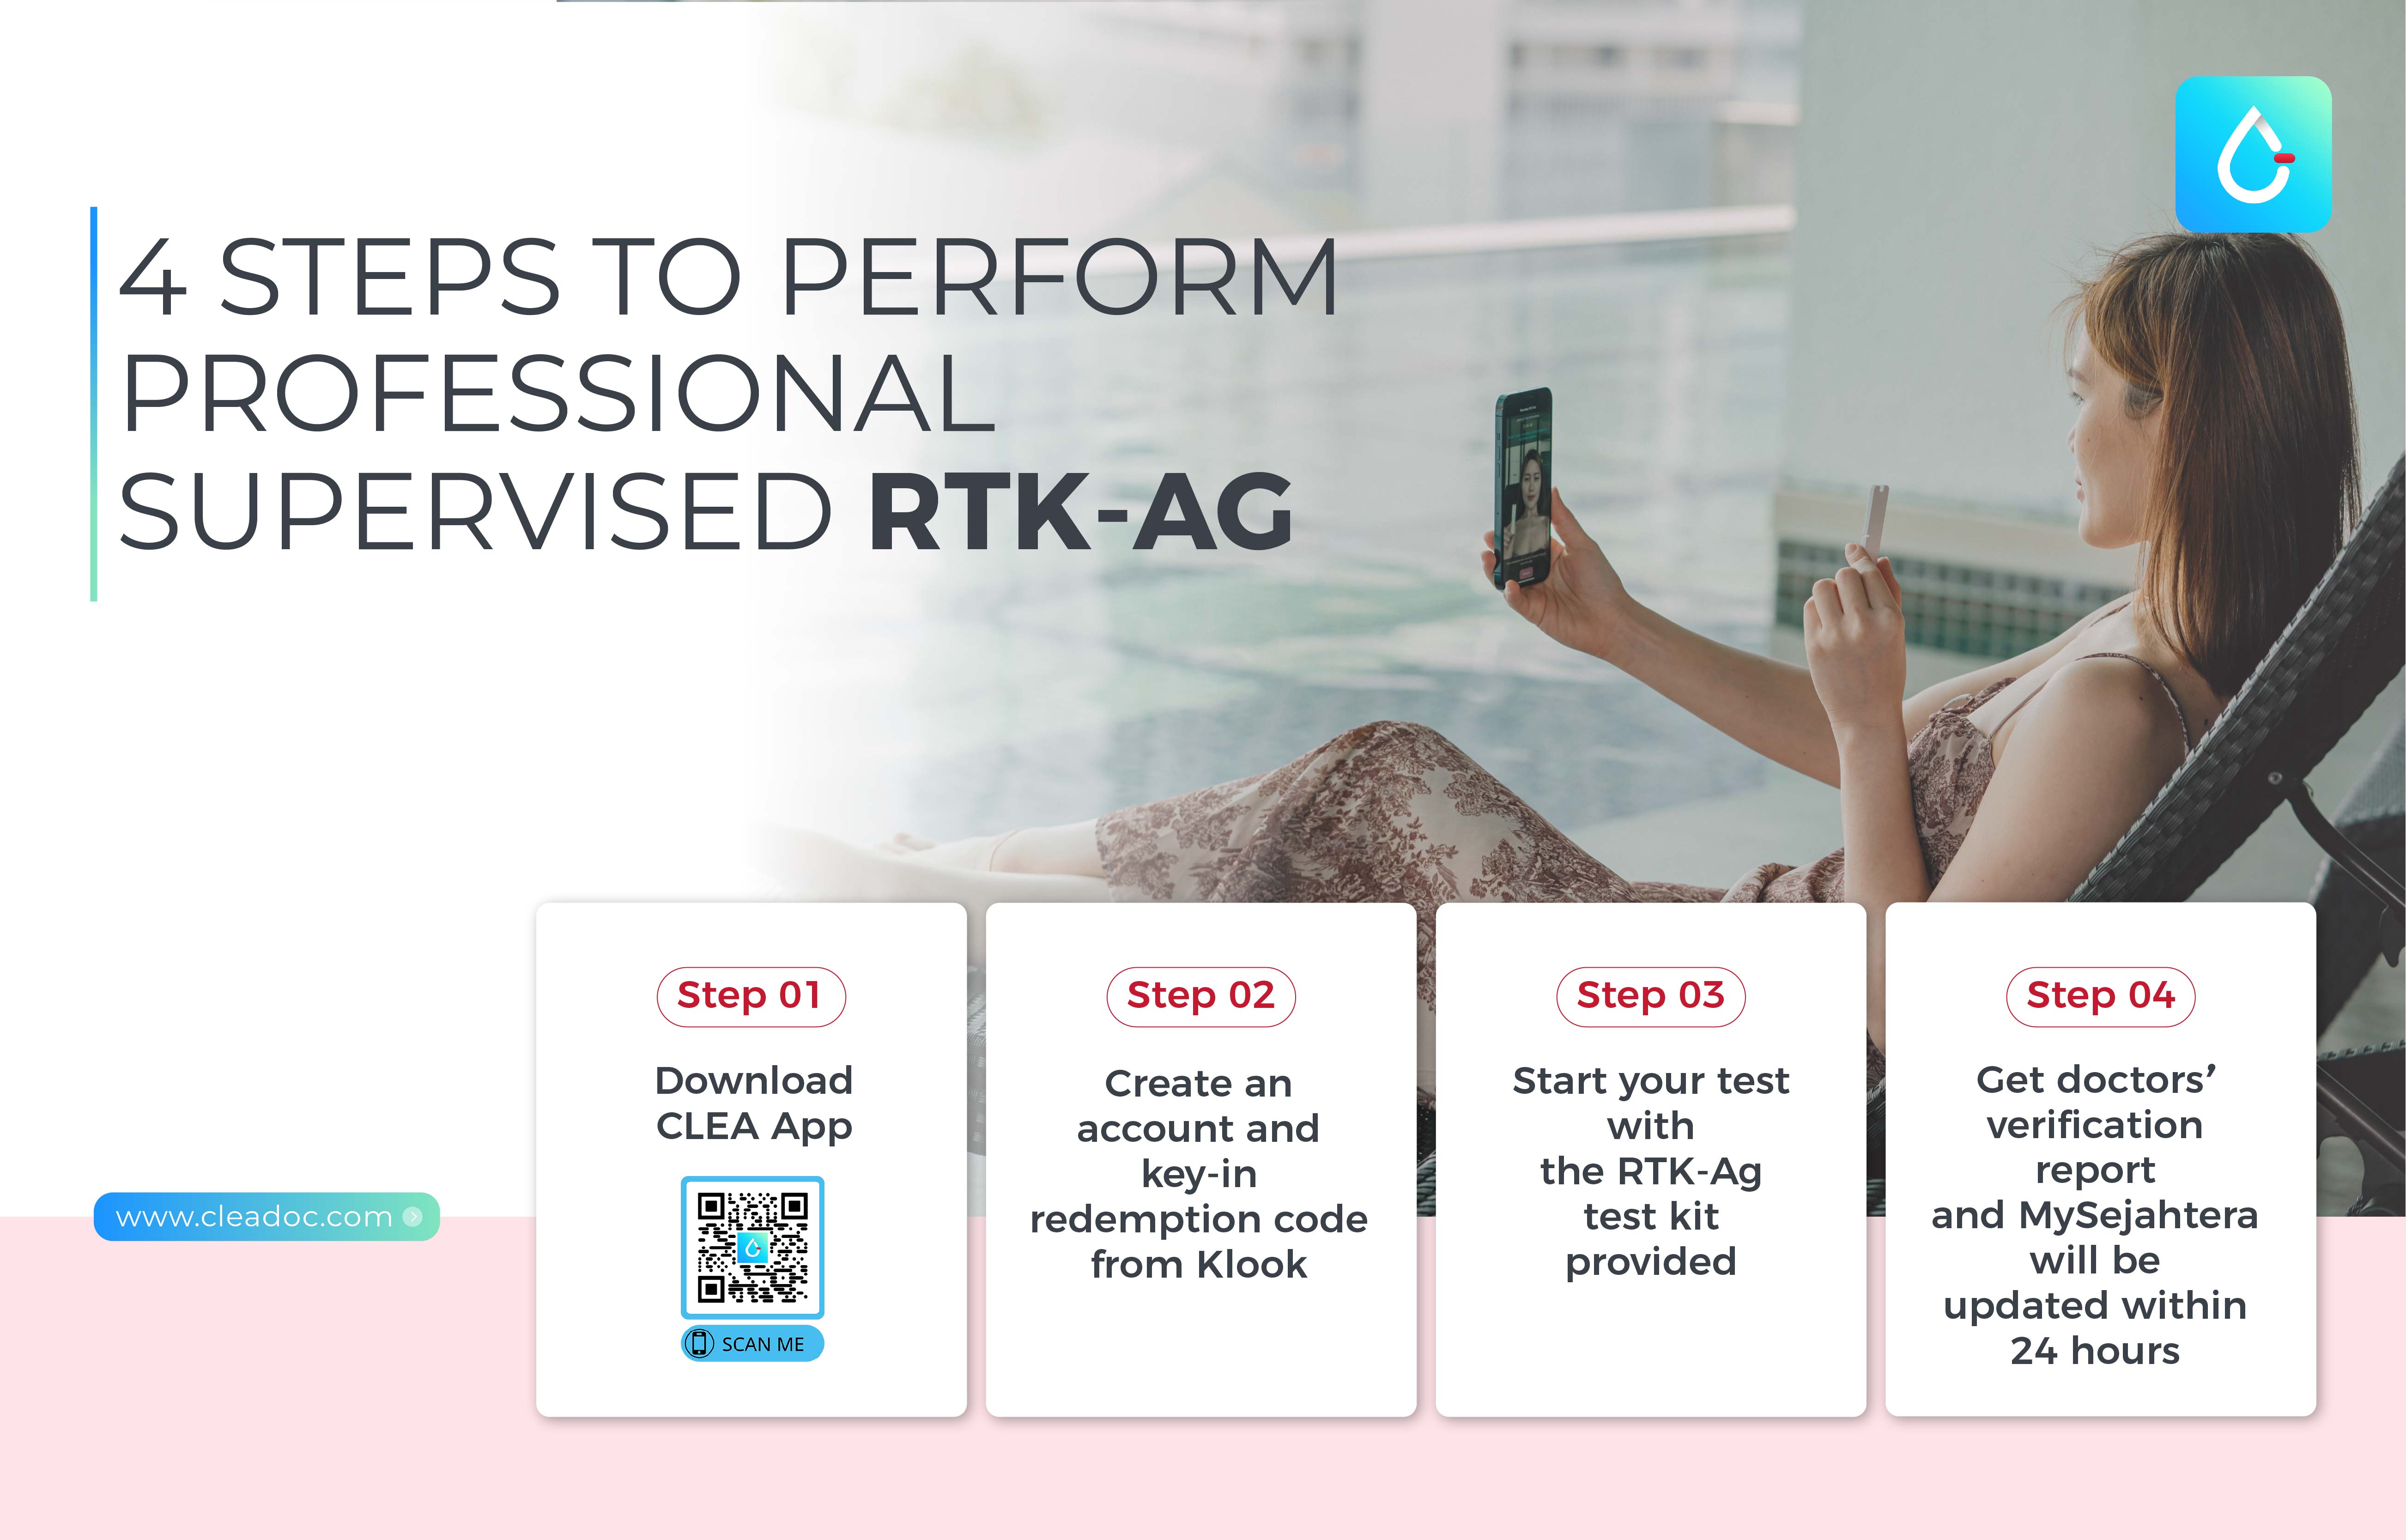 Where to buy rtk test kit